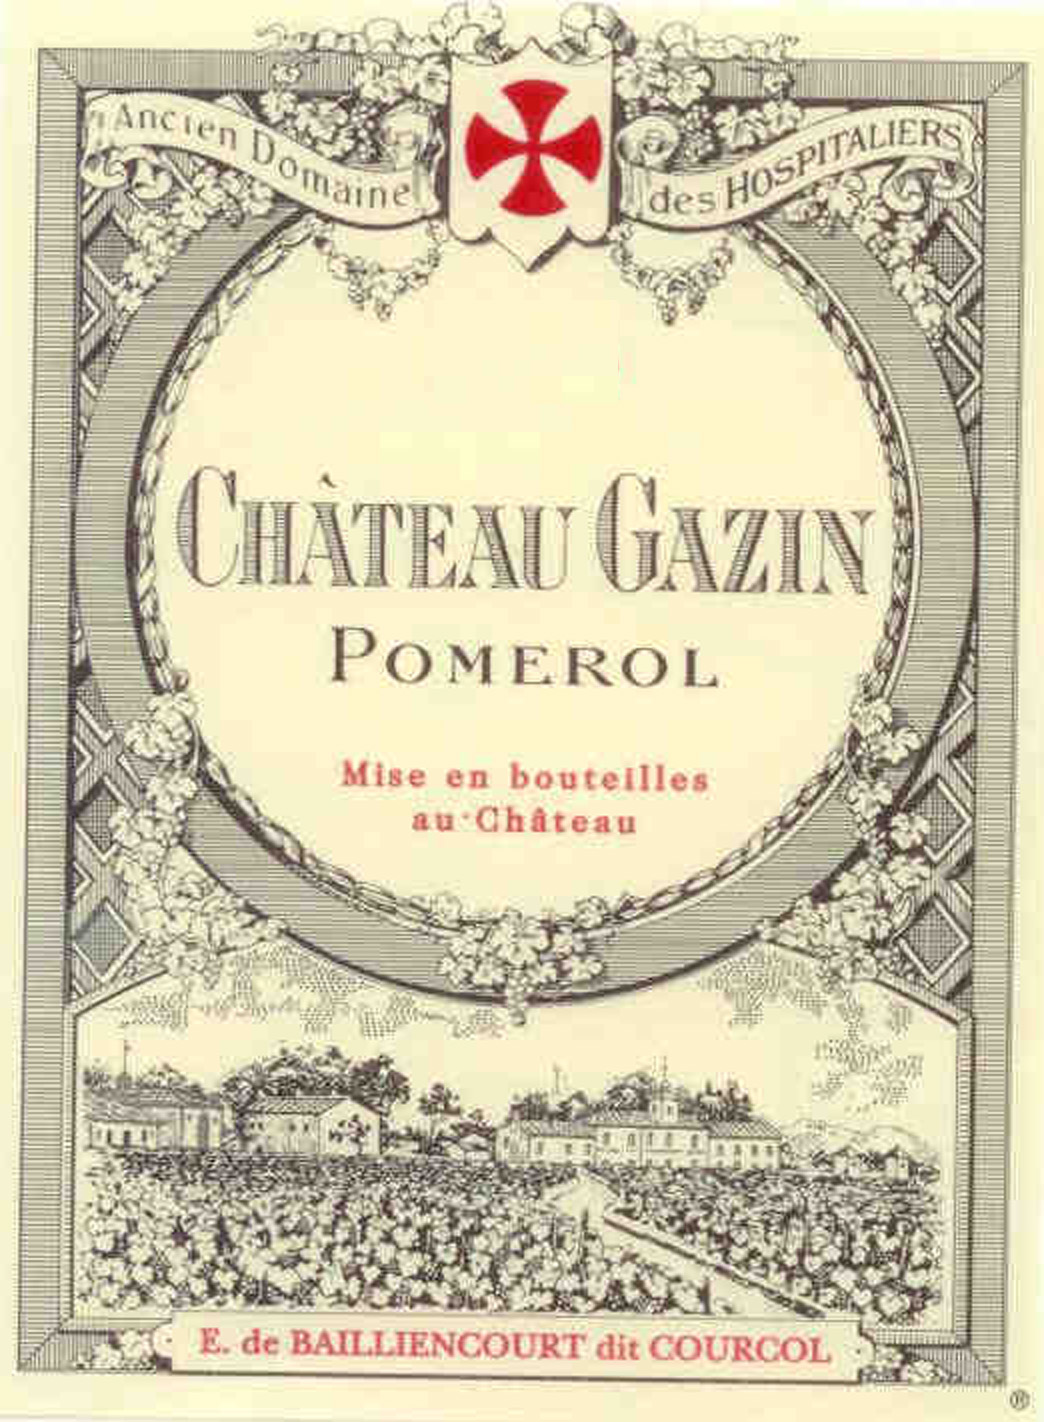 Chateau Gazin label